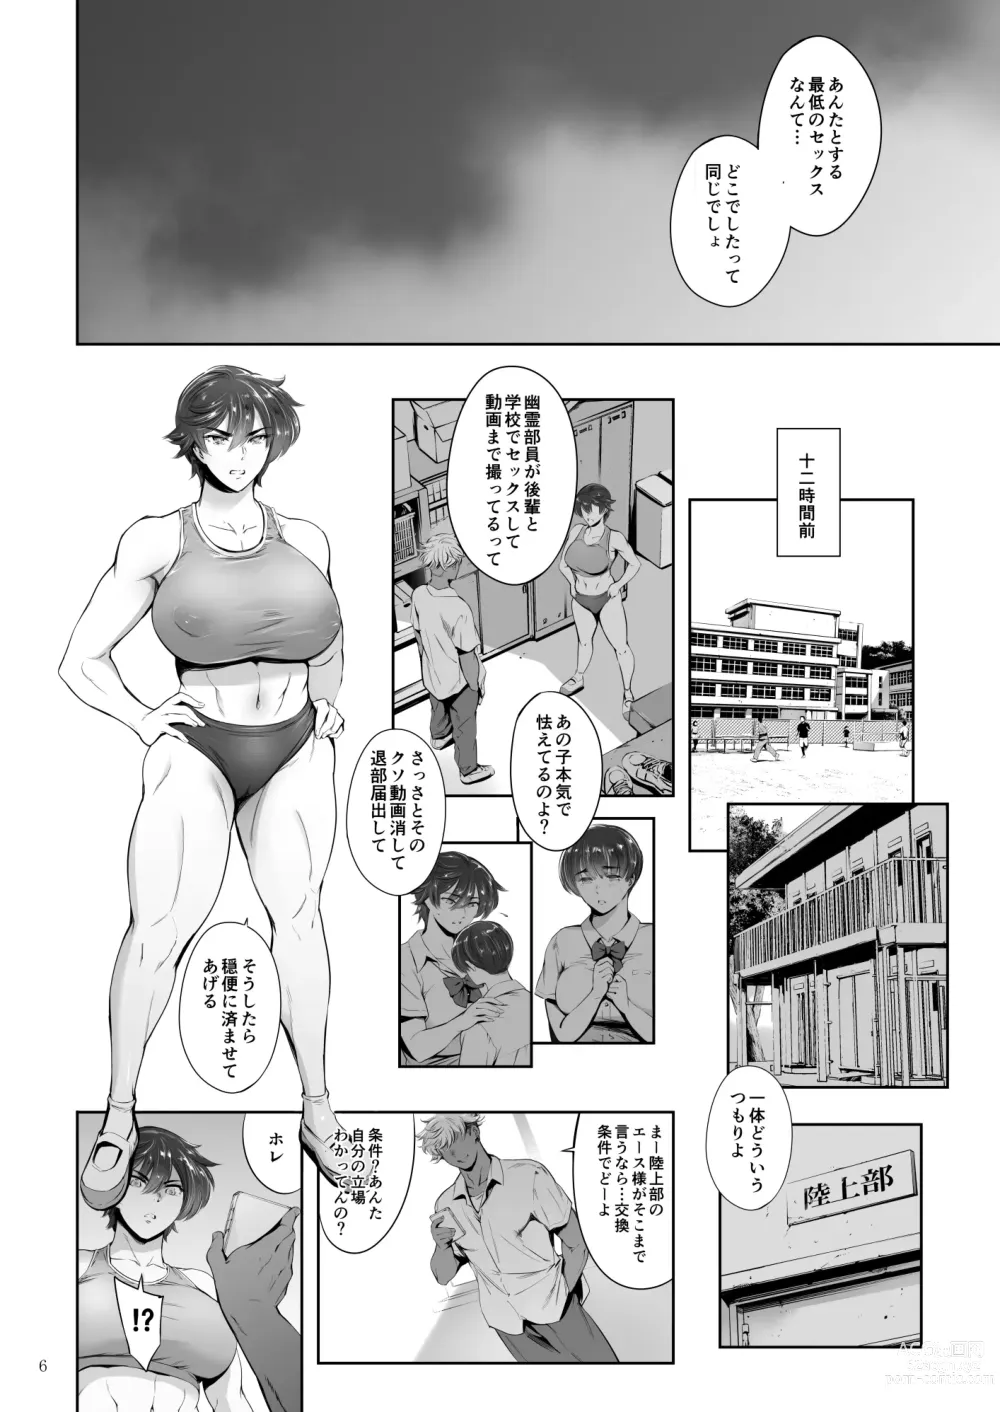 Page 6 of doujinshi Hashiru Onna